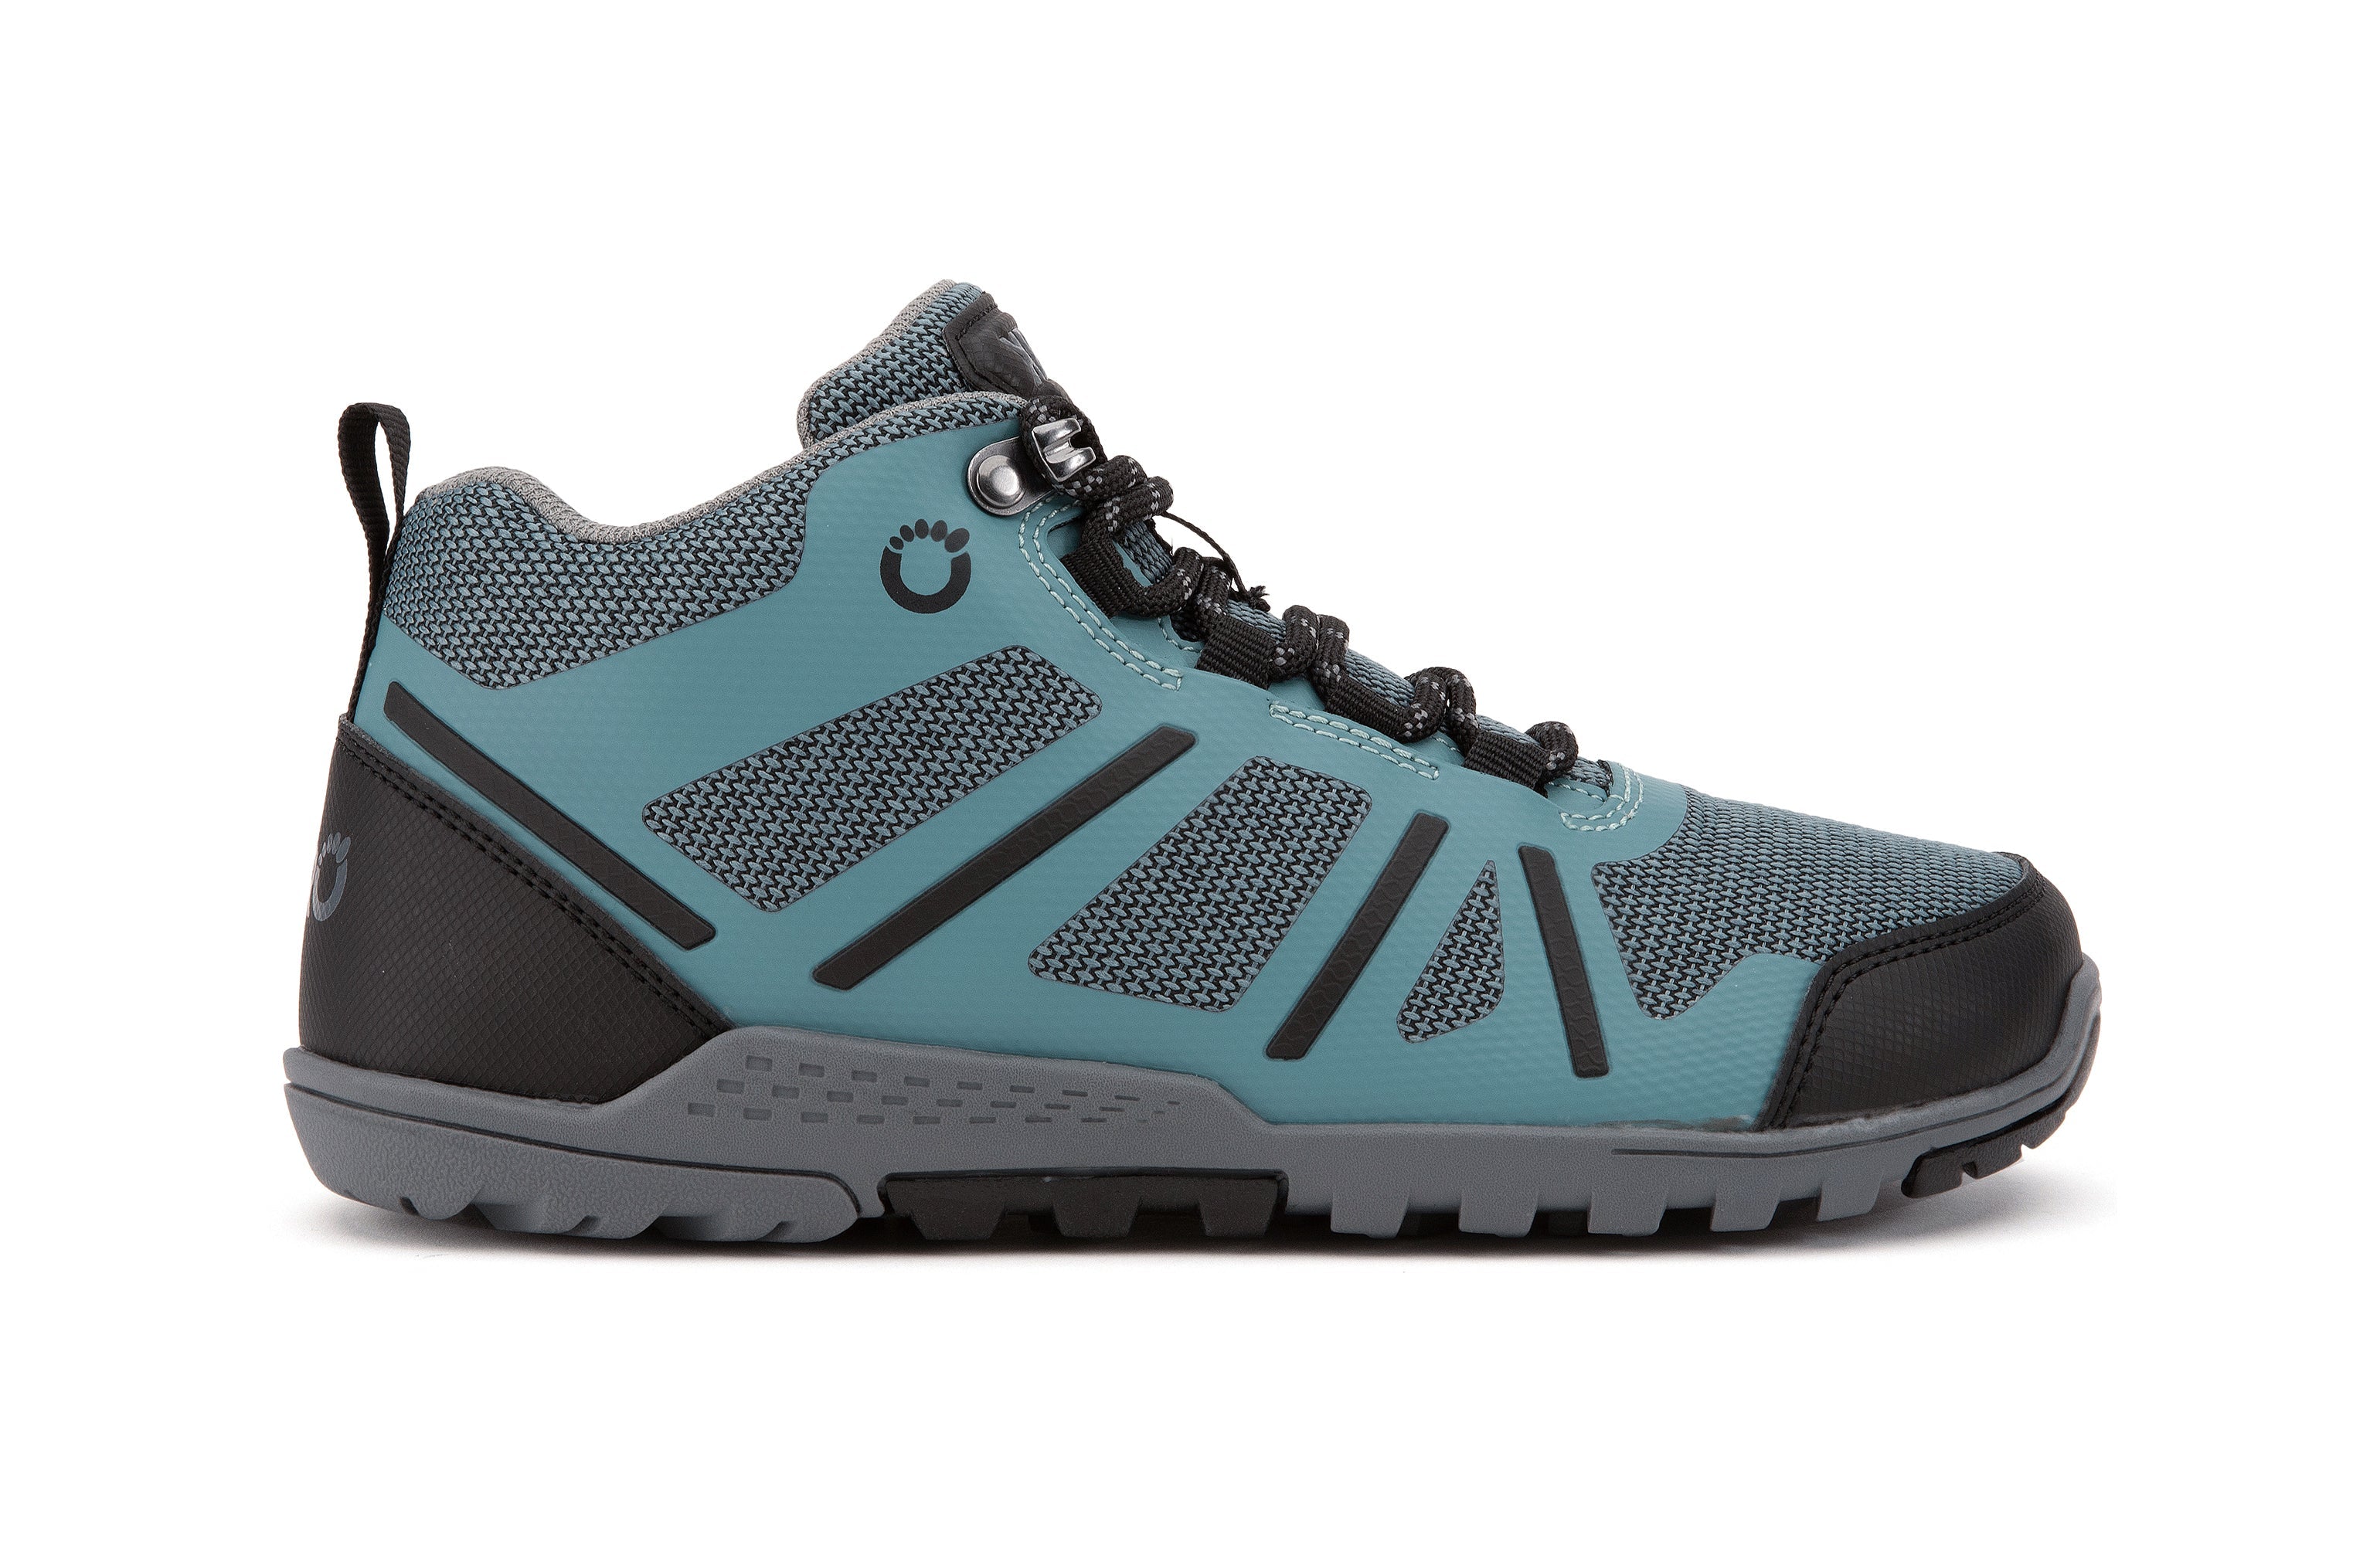 Xero Shoes Daylite Hiker Fusion Womens barfods vandrestøvler til kvinder i farven arctic blue / asphalt, yderside